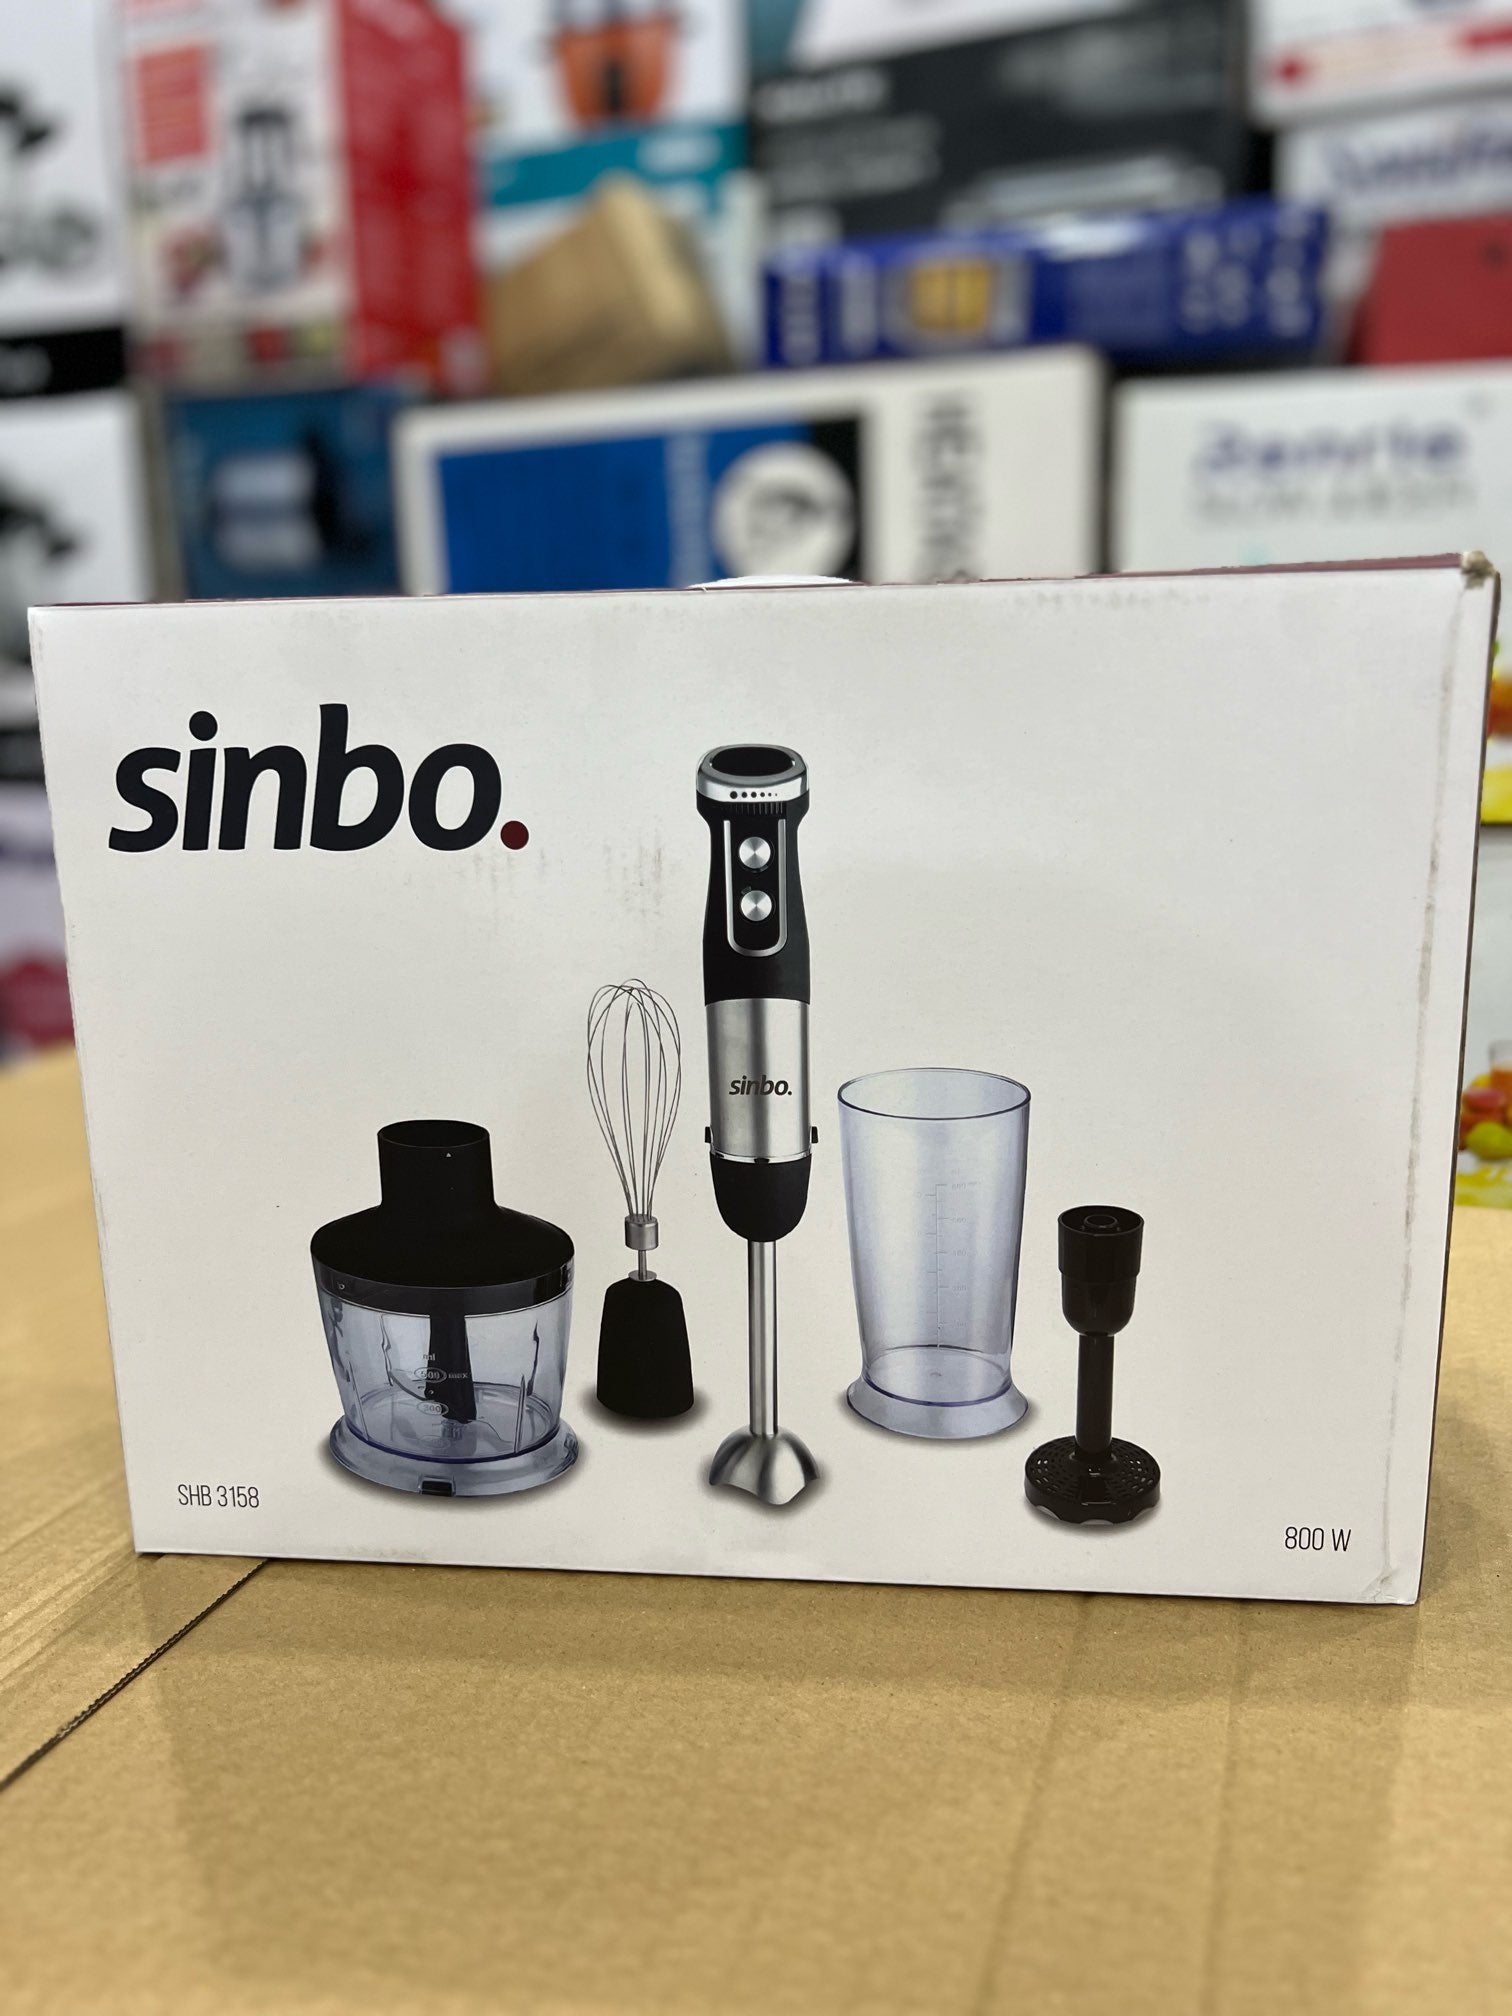 Imported high quality sinbo hand blender set